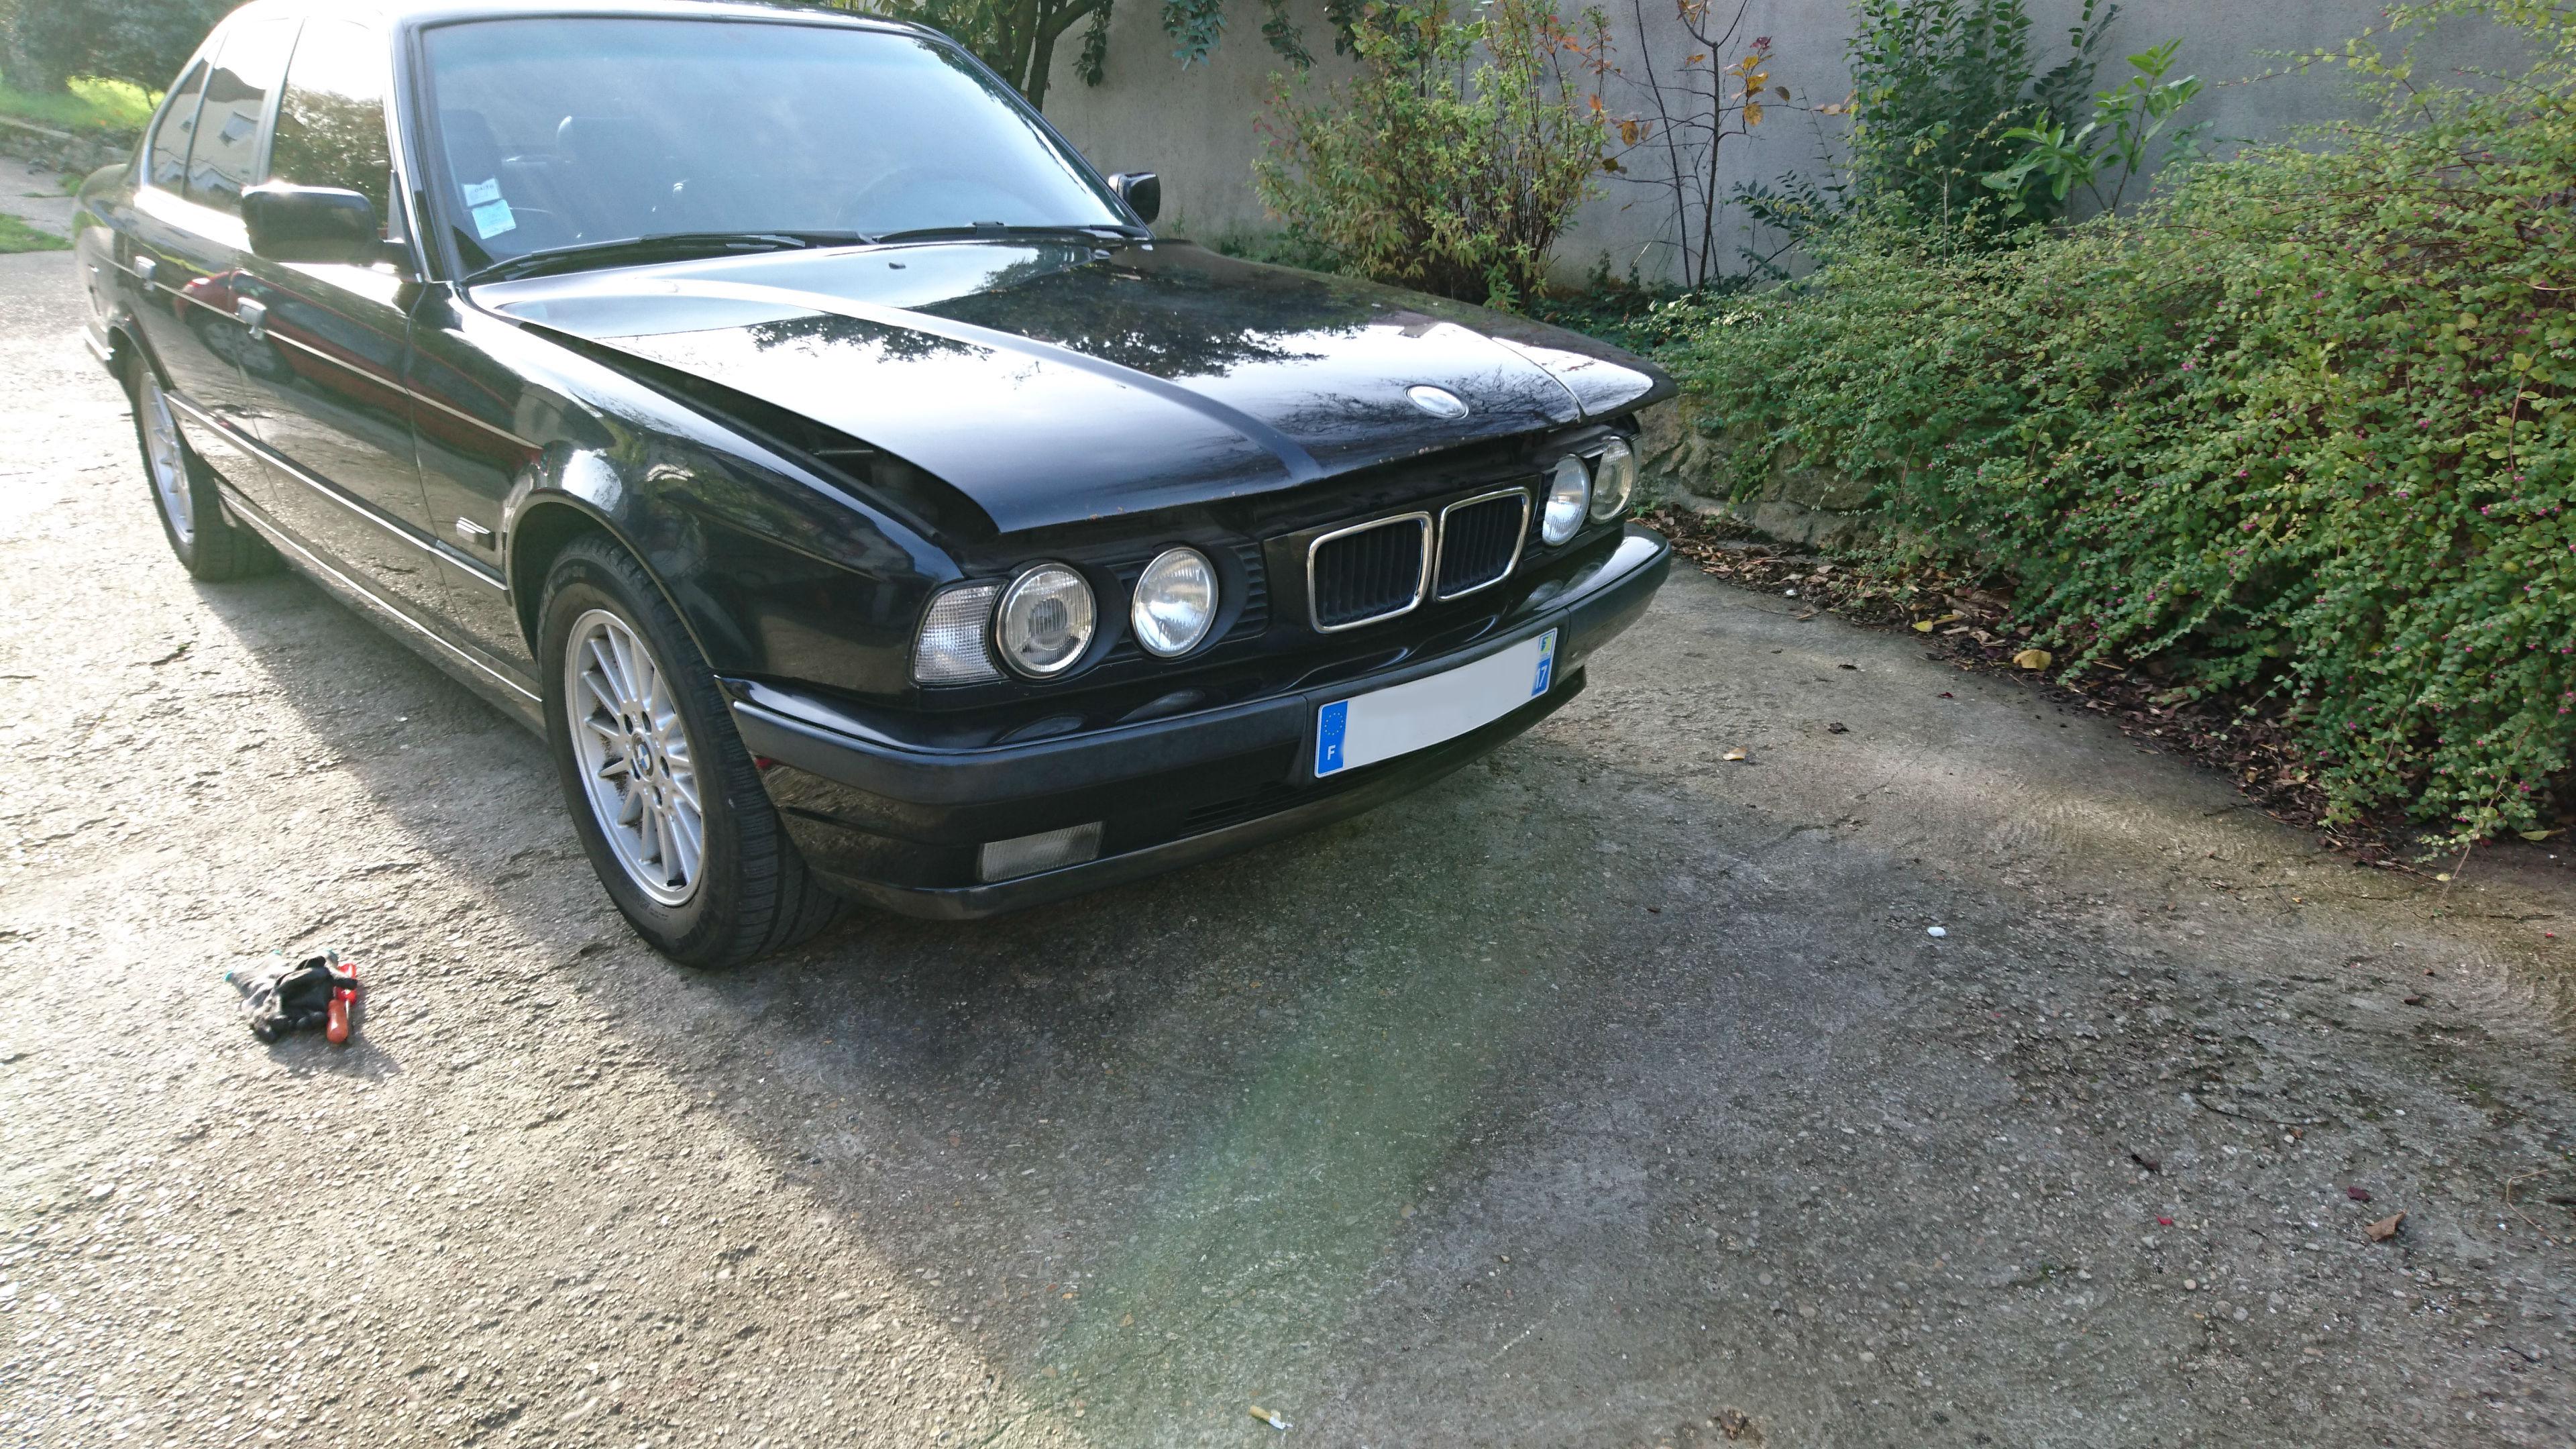 KaKtuSs77] Restauration BMW 525i de 1995, passage turbo : Vos ...